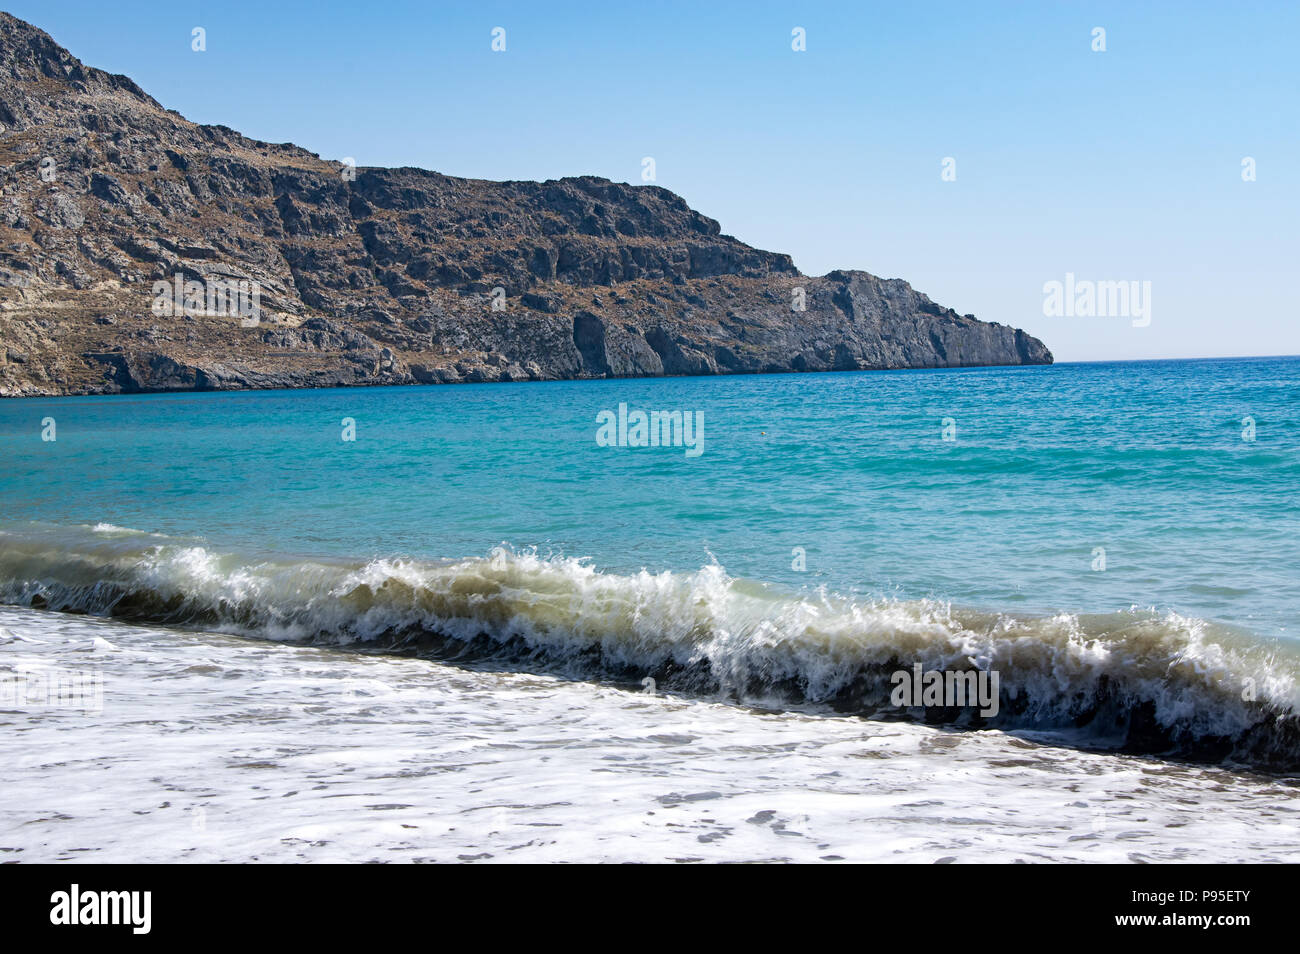 Beach of Libyan sea in Plakias resort, Crete island, Greece Stock Photo